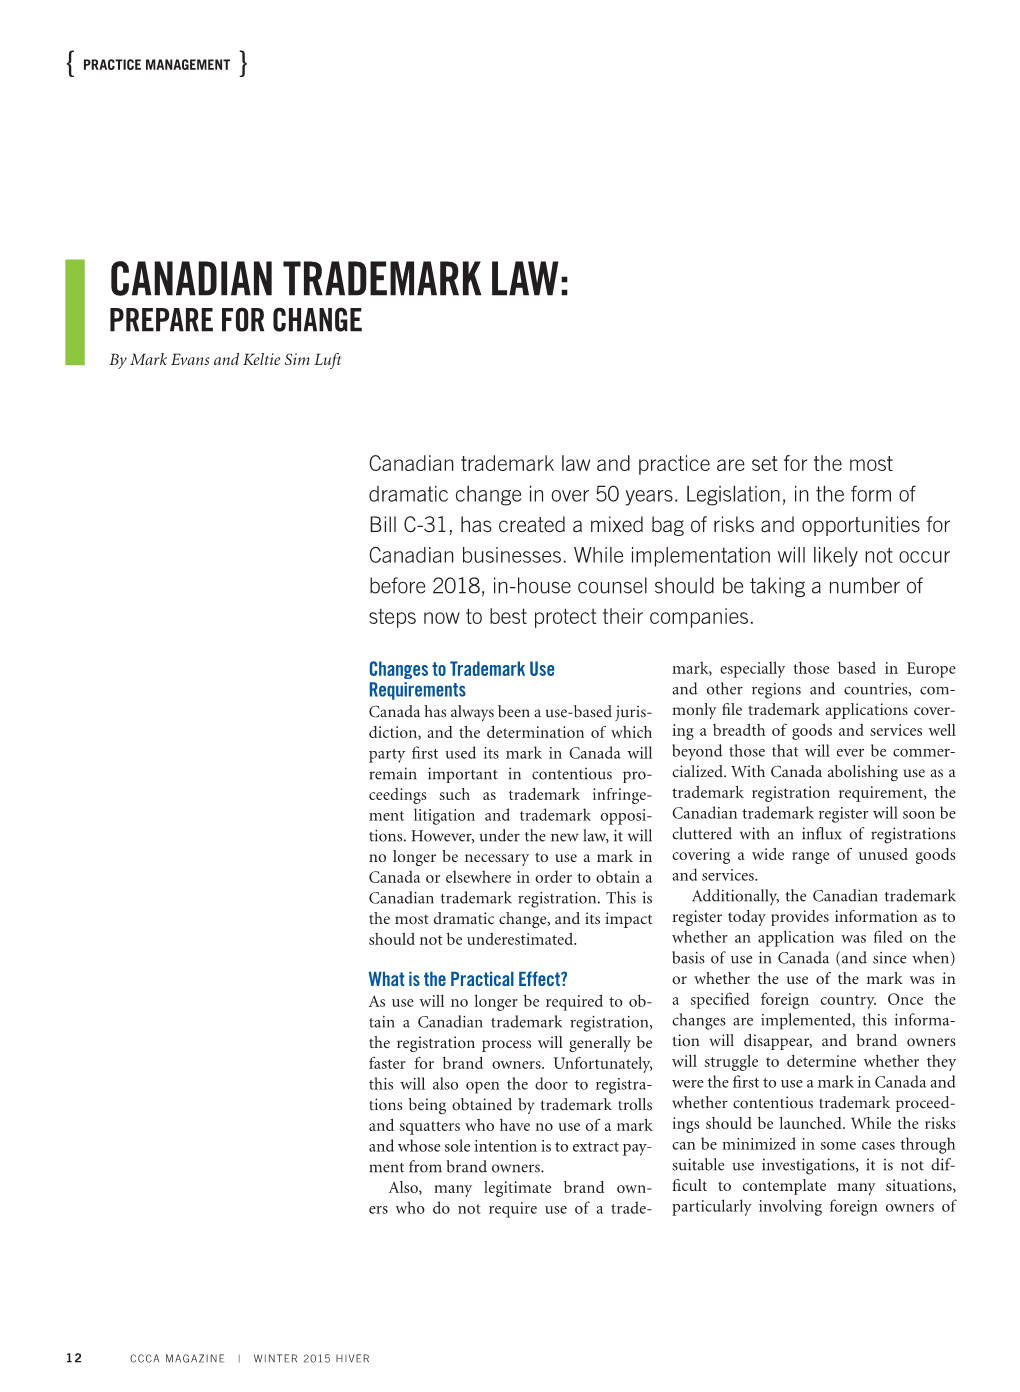 Canadian Trademark Law